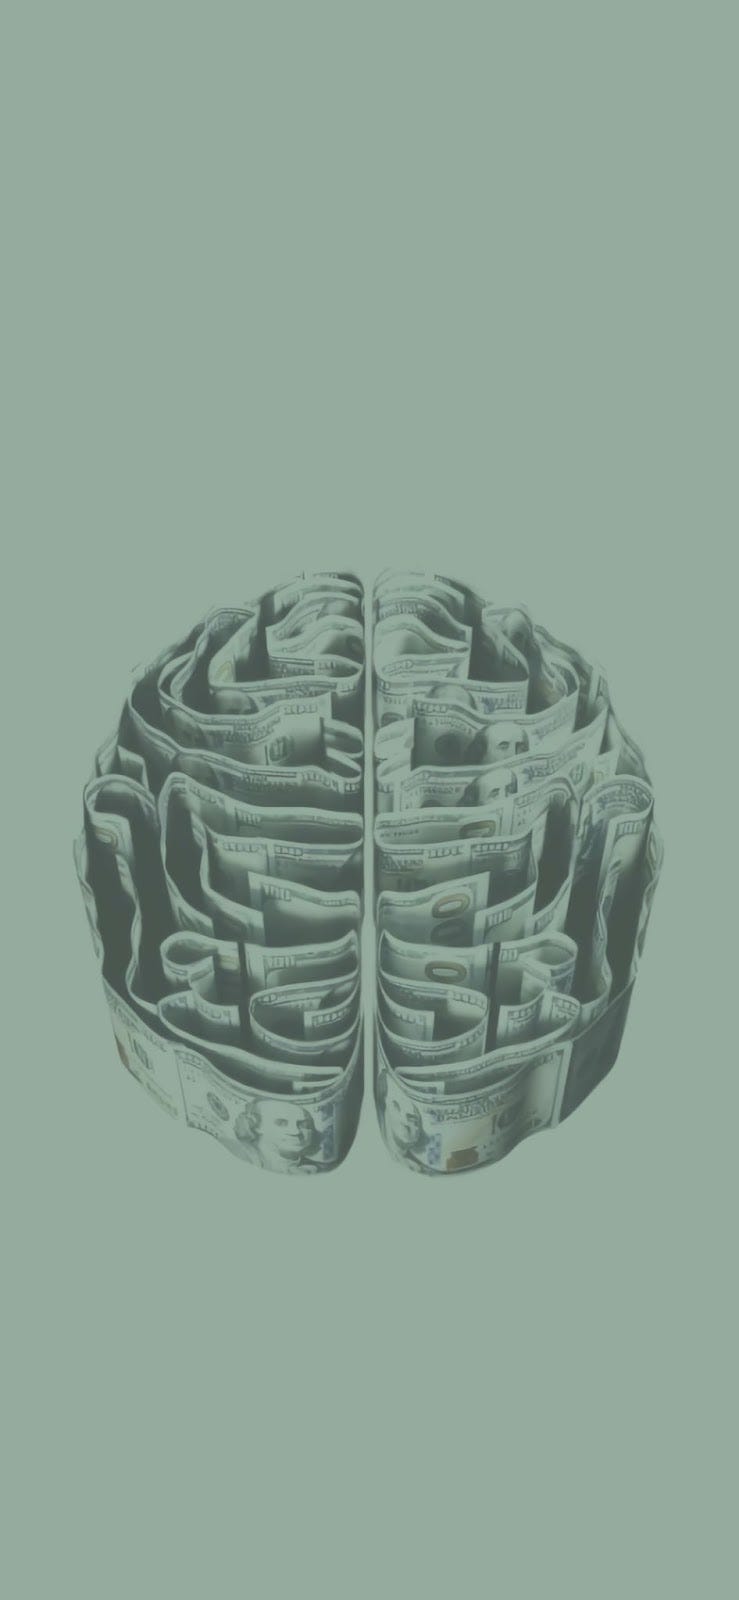 Image of a brain maze